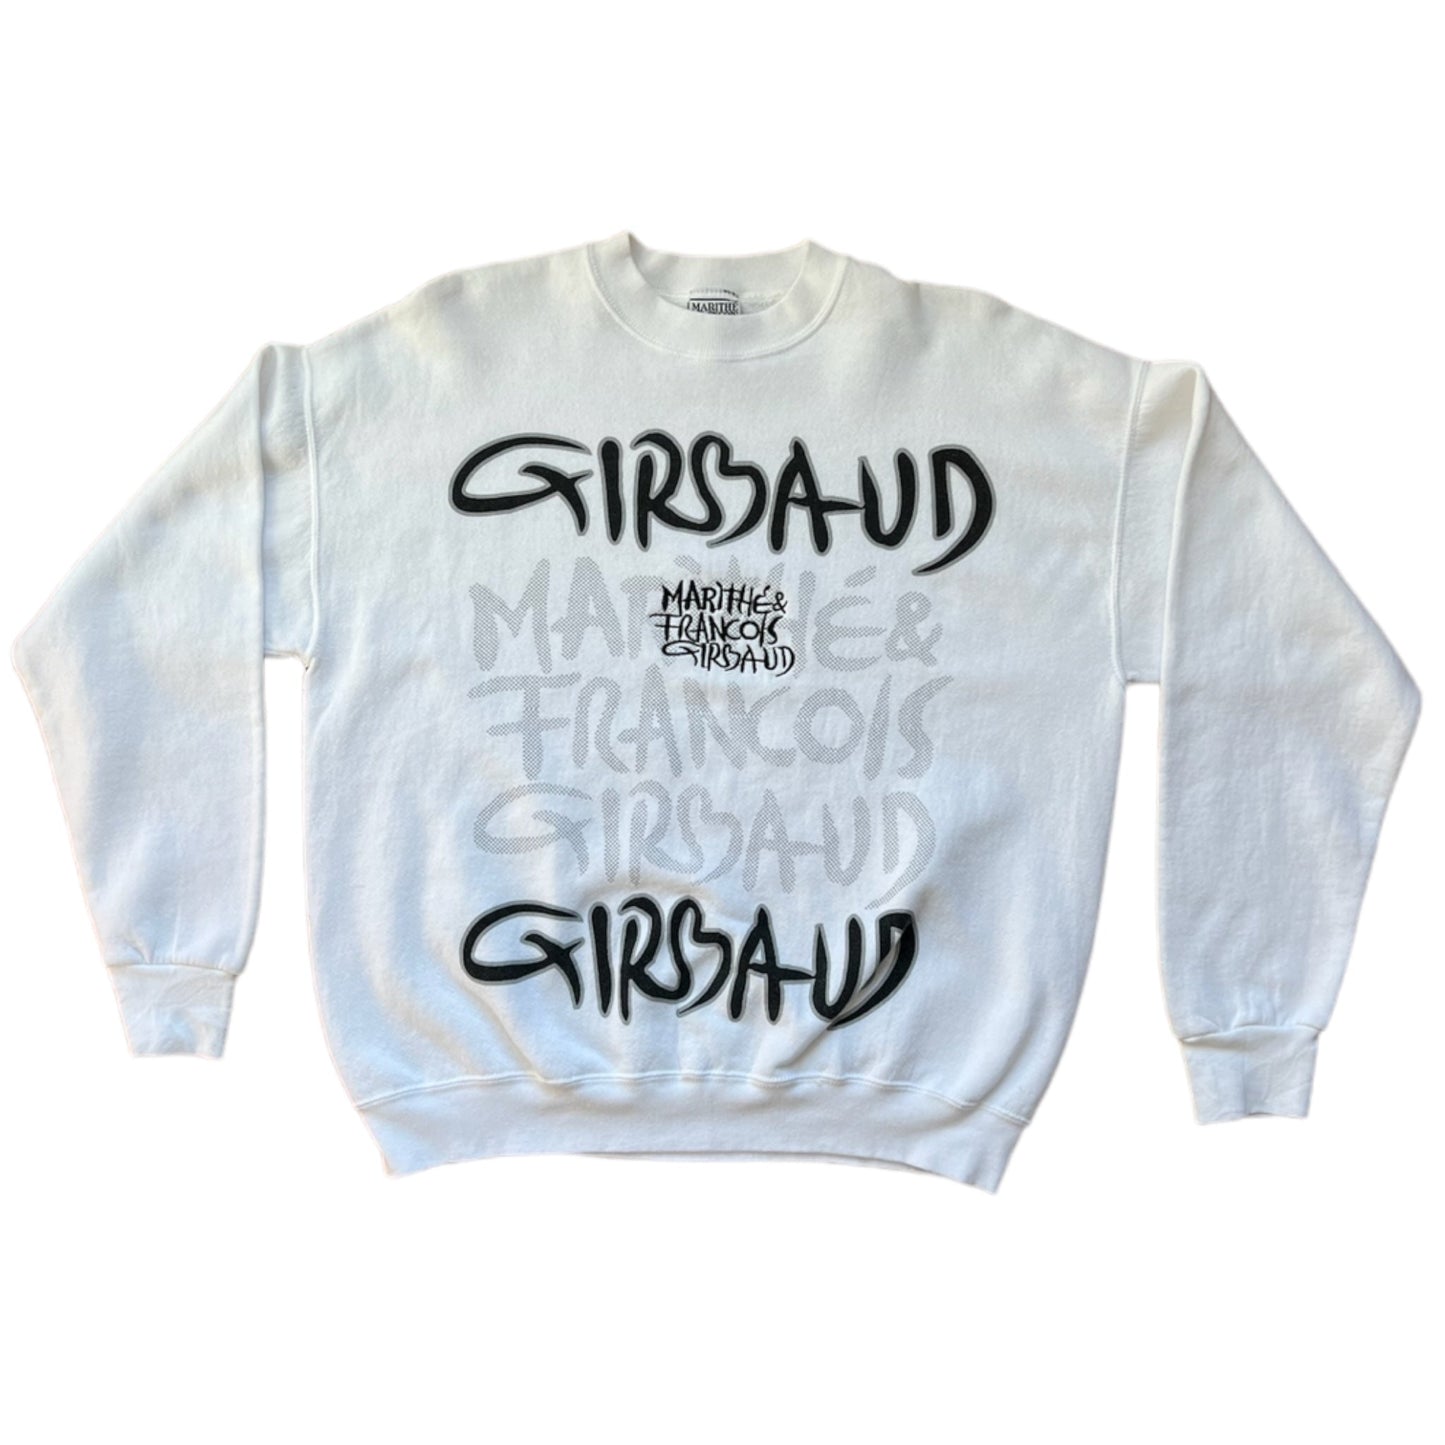 Vintage Girbaud Sweatshirt - Something about Sofia